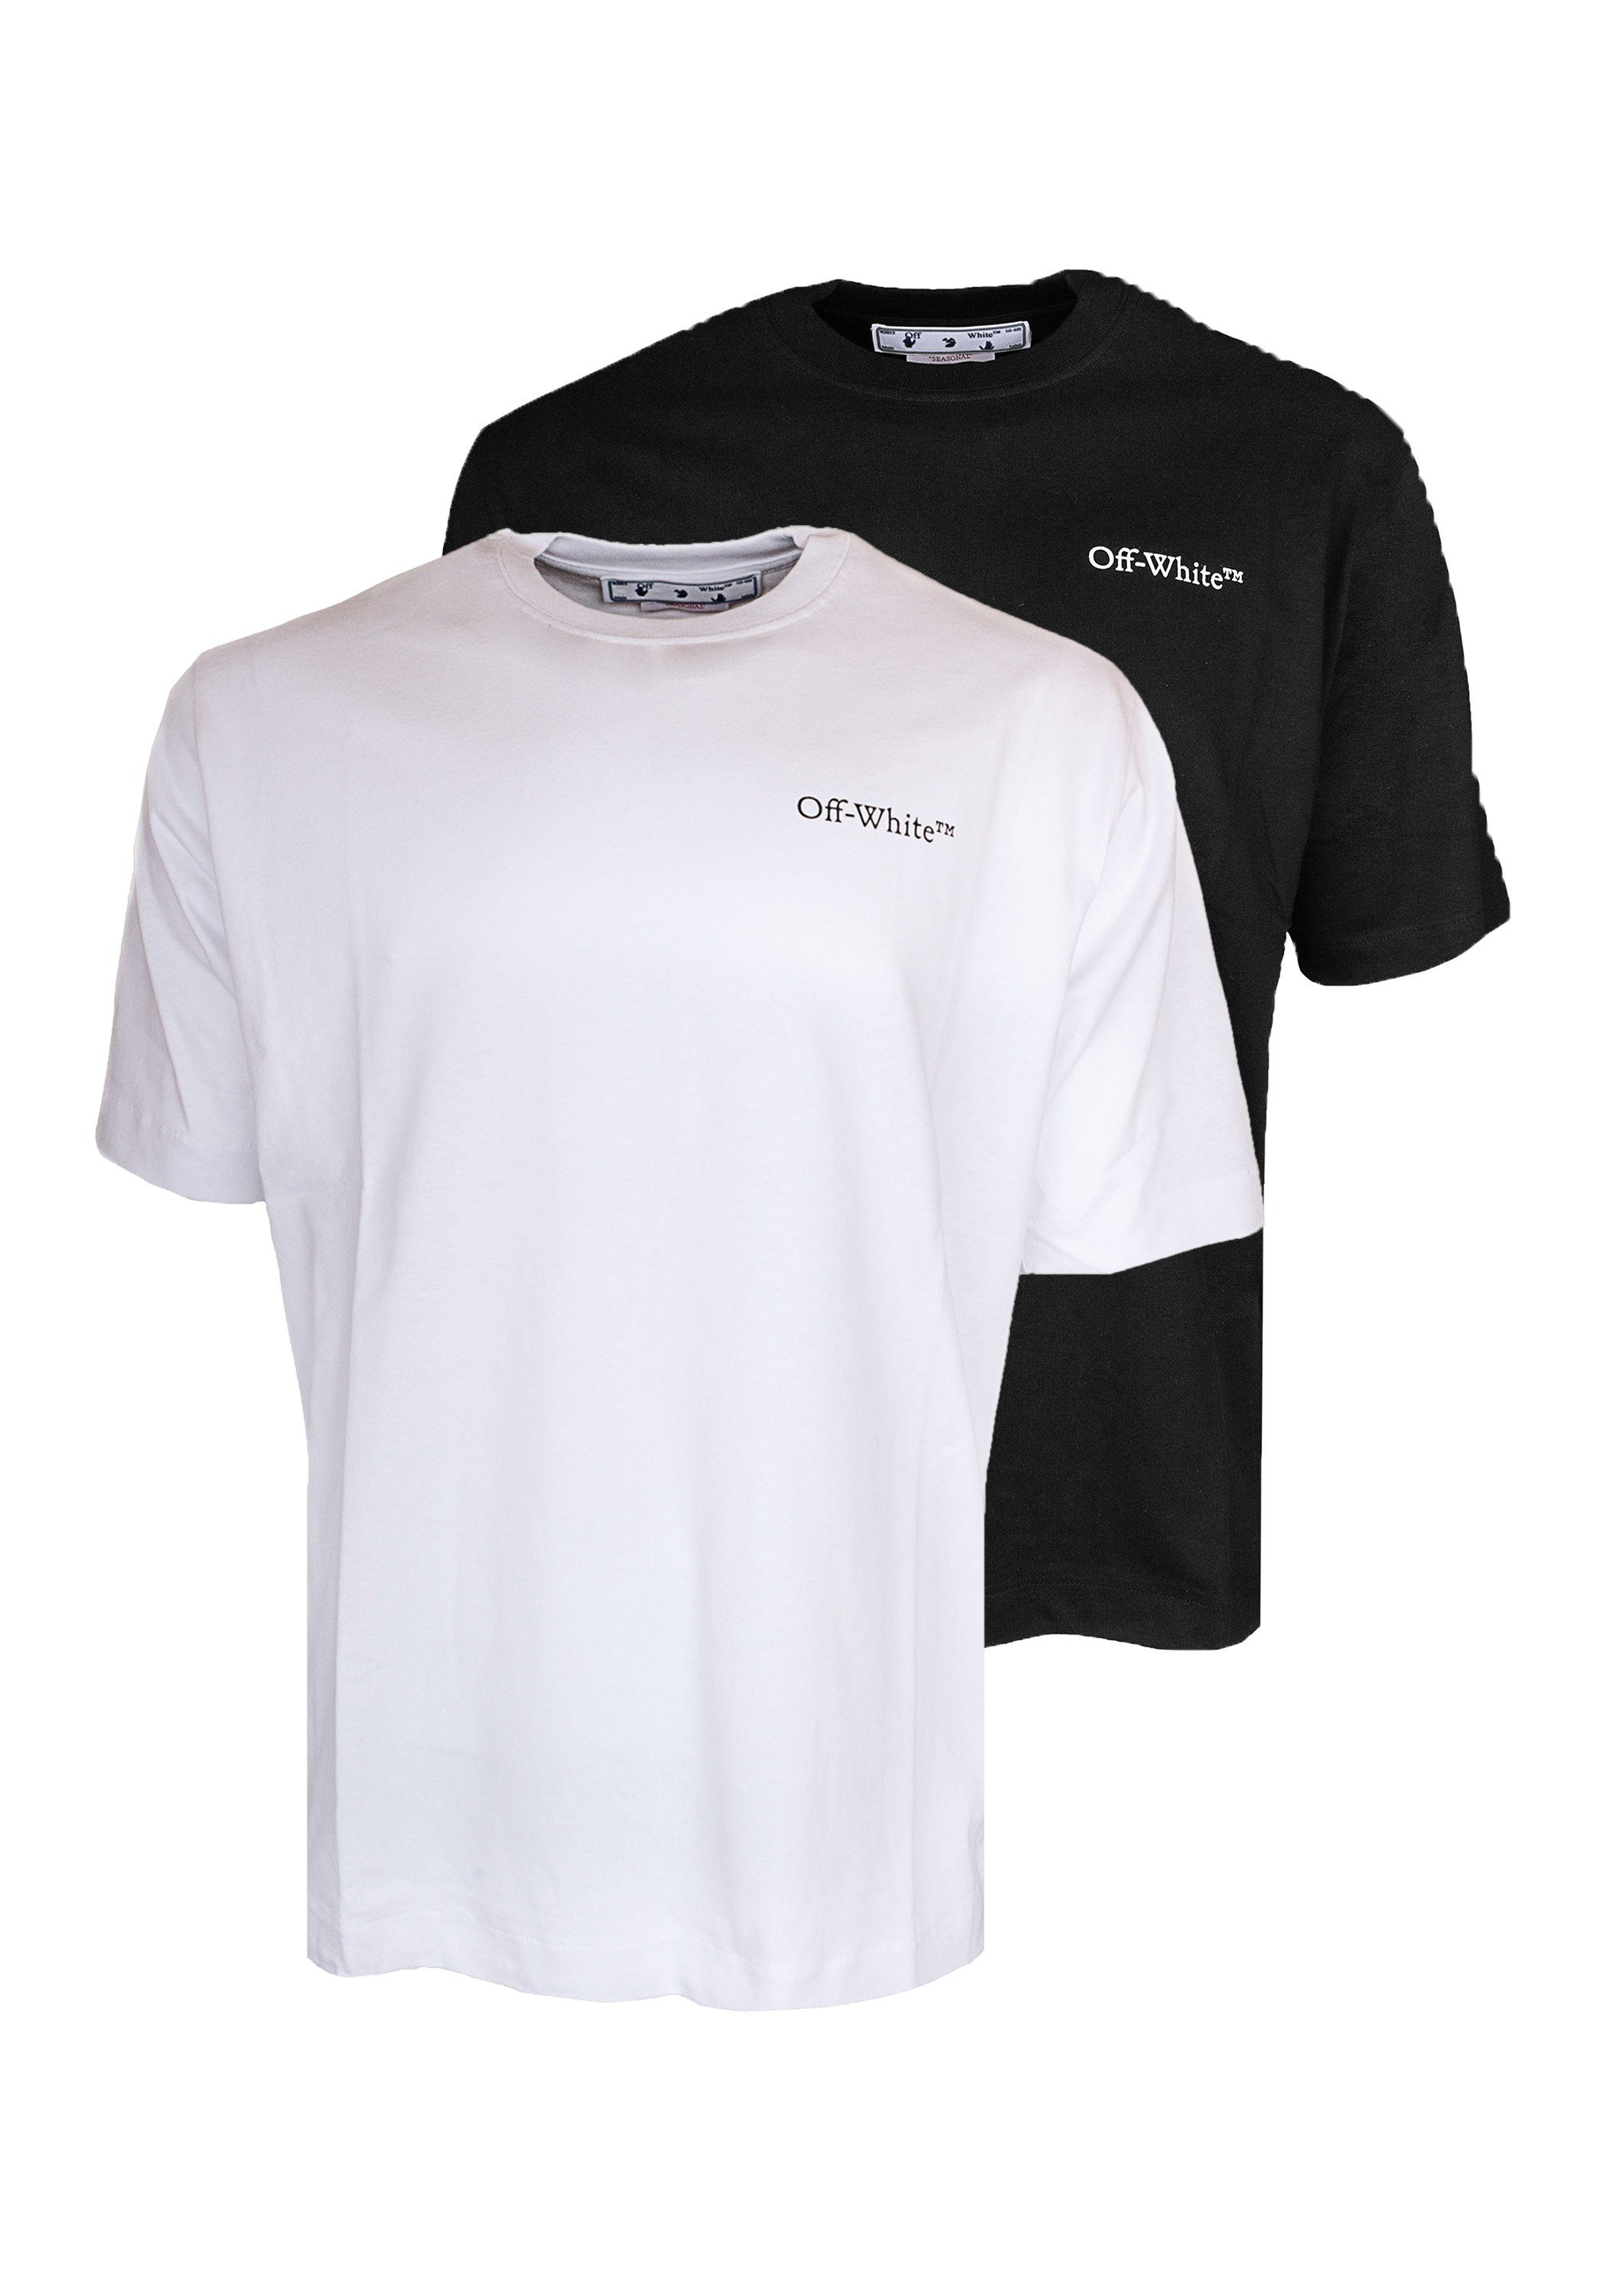 OFF-WHITE T-Shirt Off White Herren Shirt Caravaggio T-Shirt Crowning